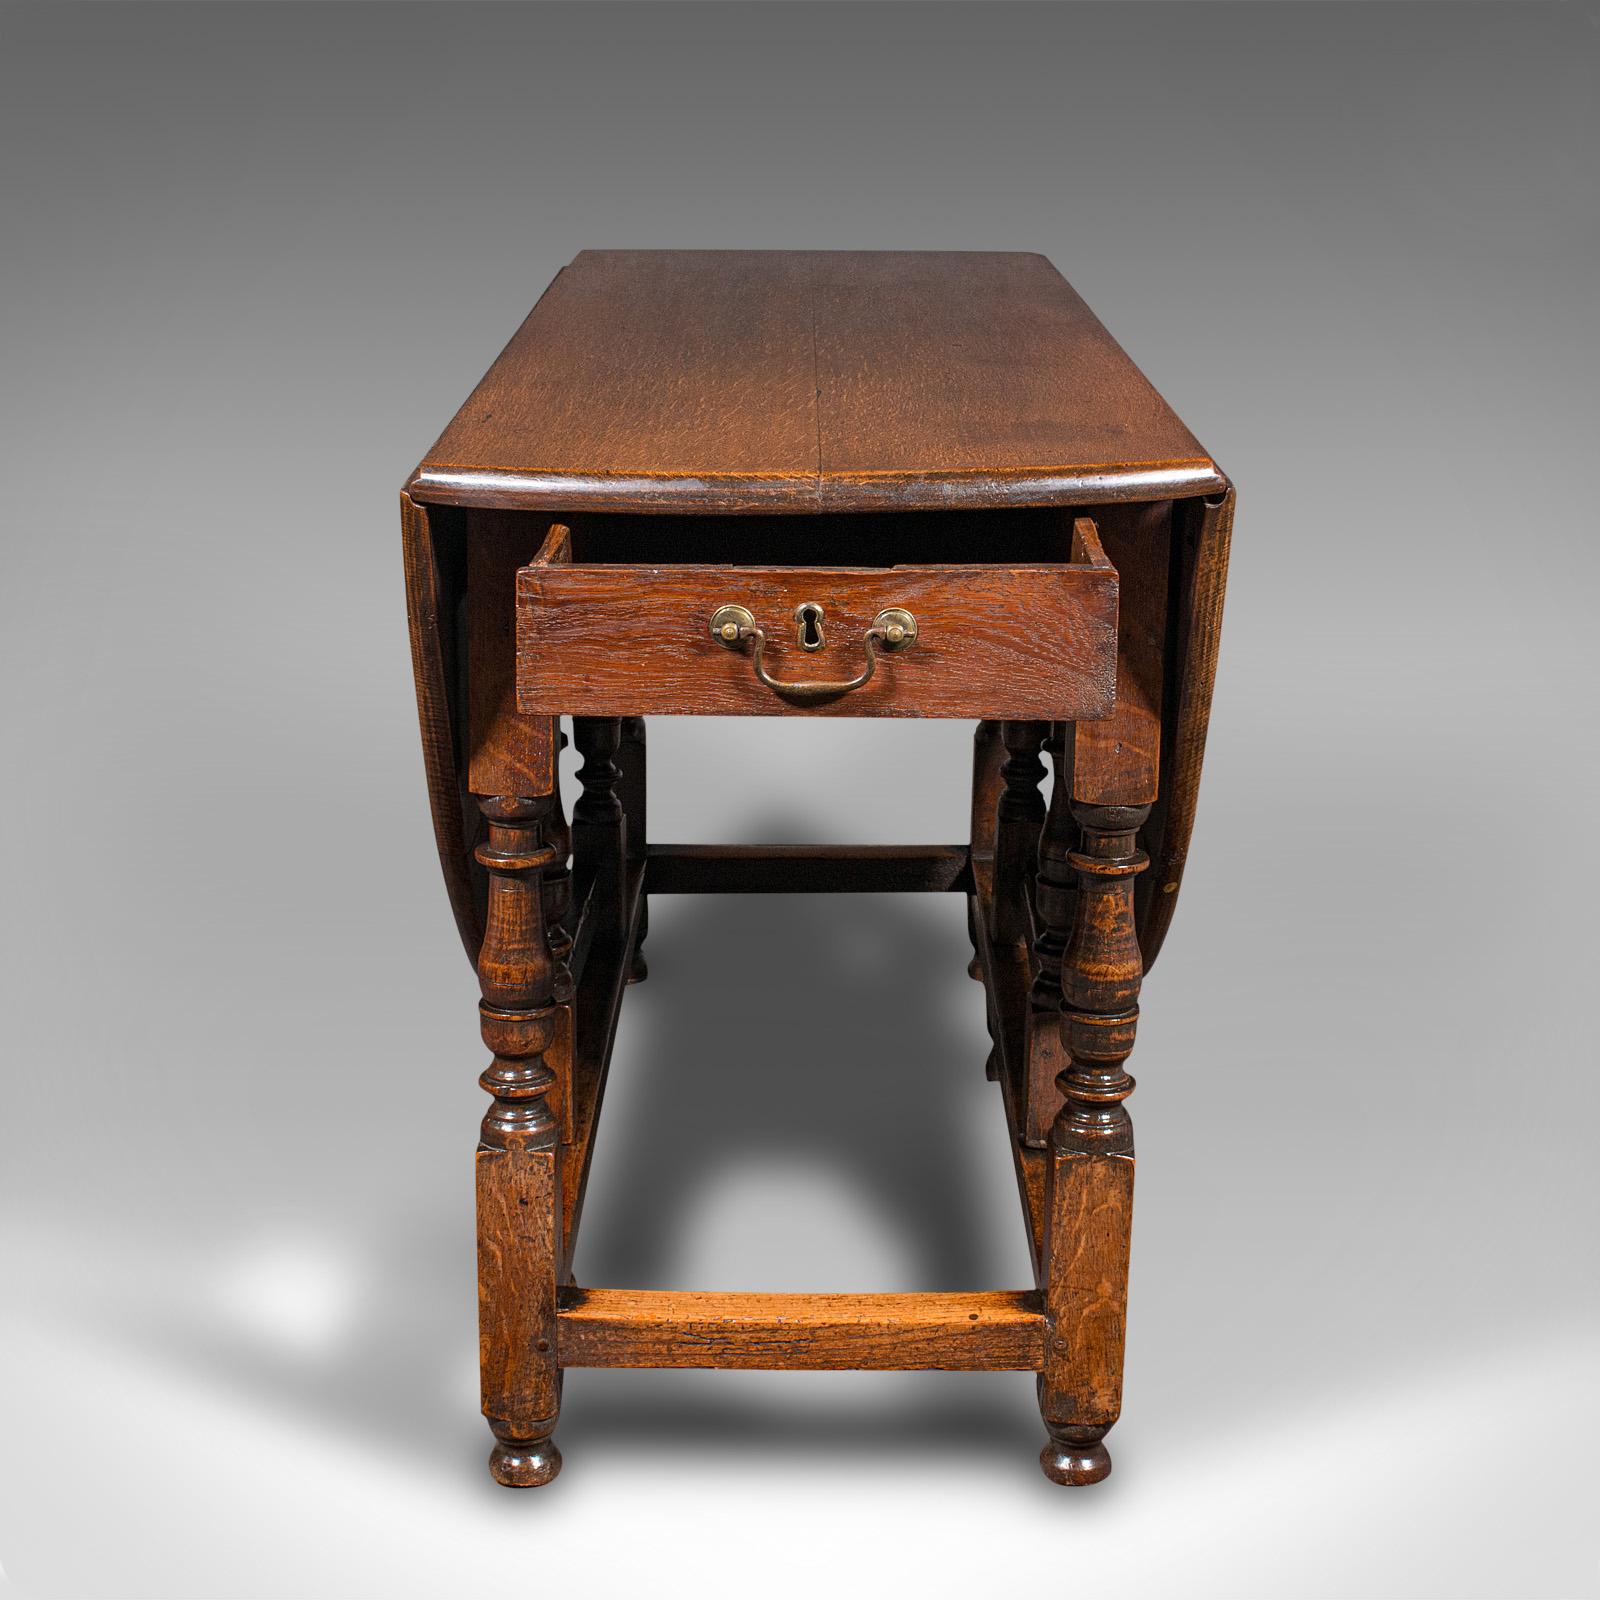 British Antique 4-6 Seat Gate Leg Table, English, Oak, Extending, Farmhouse, Georgian For Sale